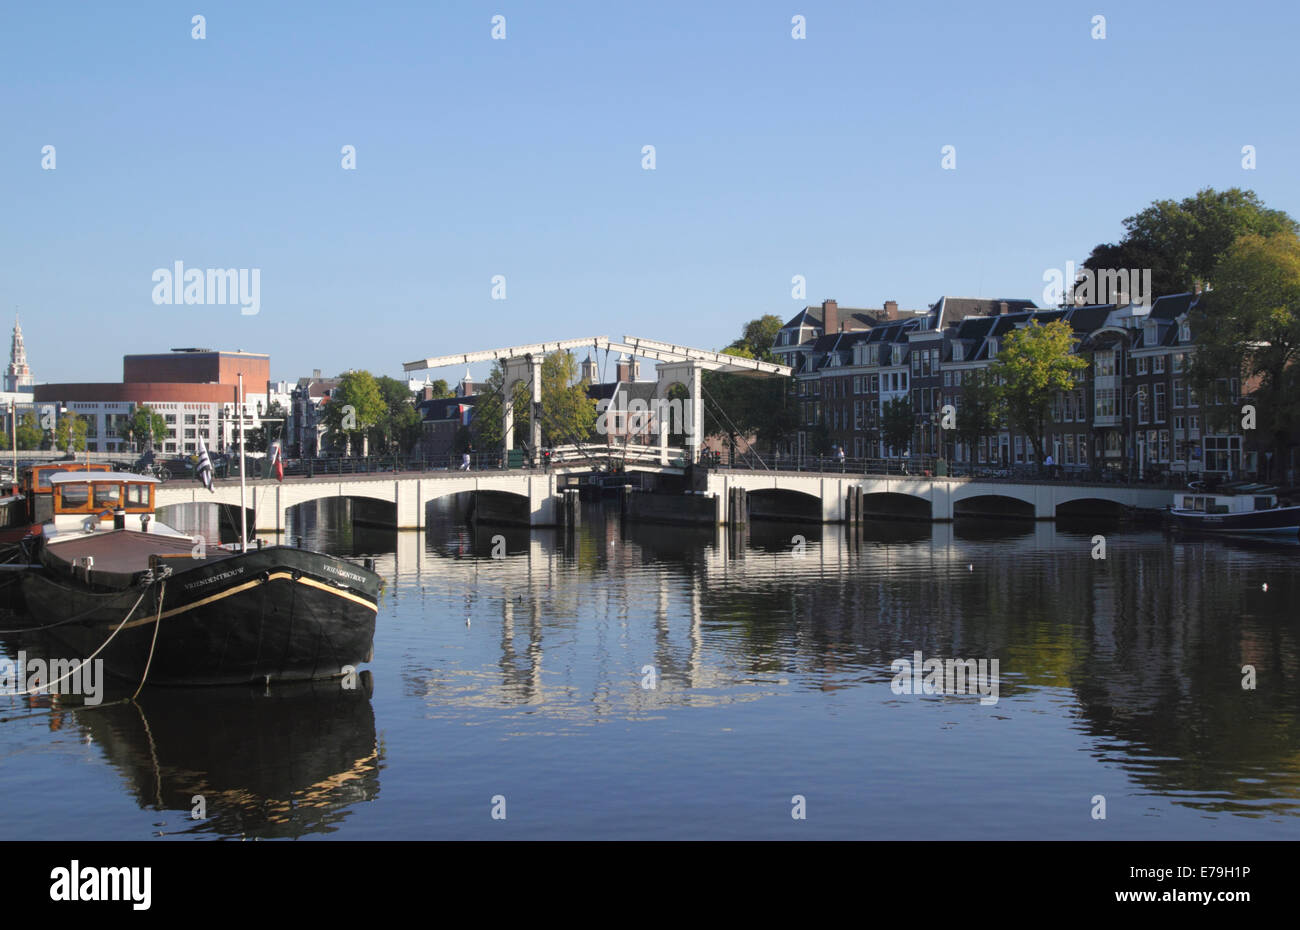 Magere Brug drawbridge over the River Amstel Amsterdam Stock Photo